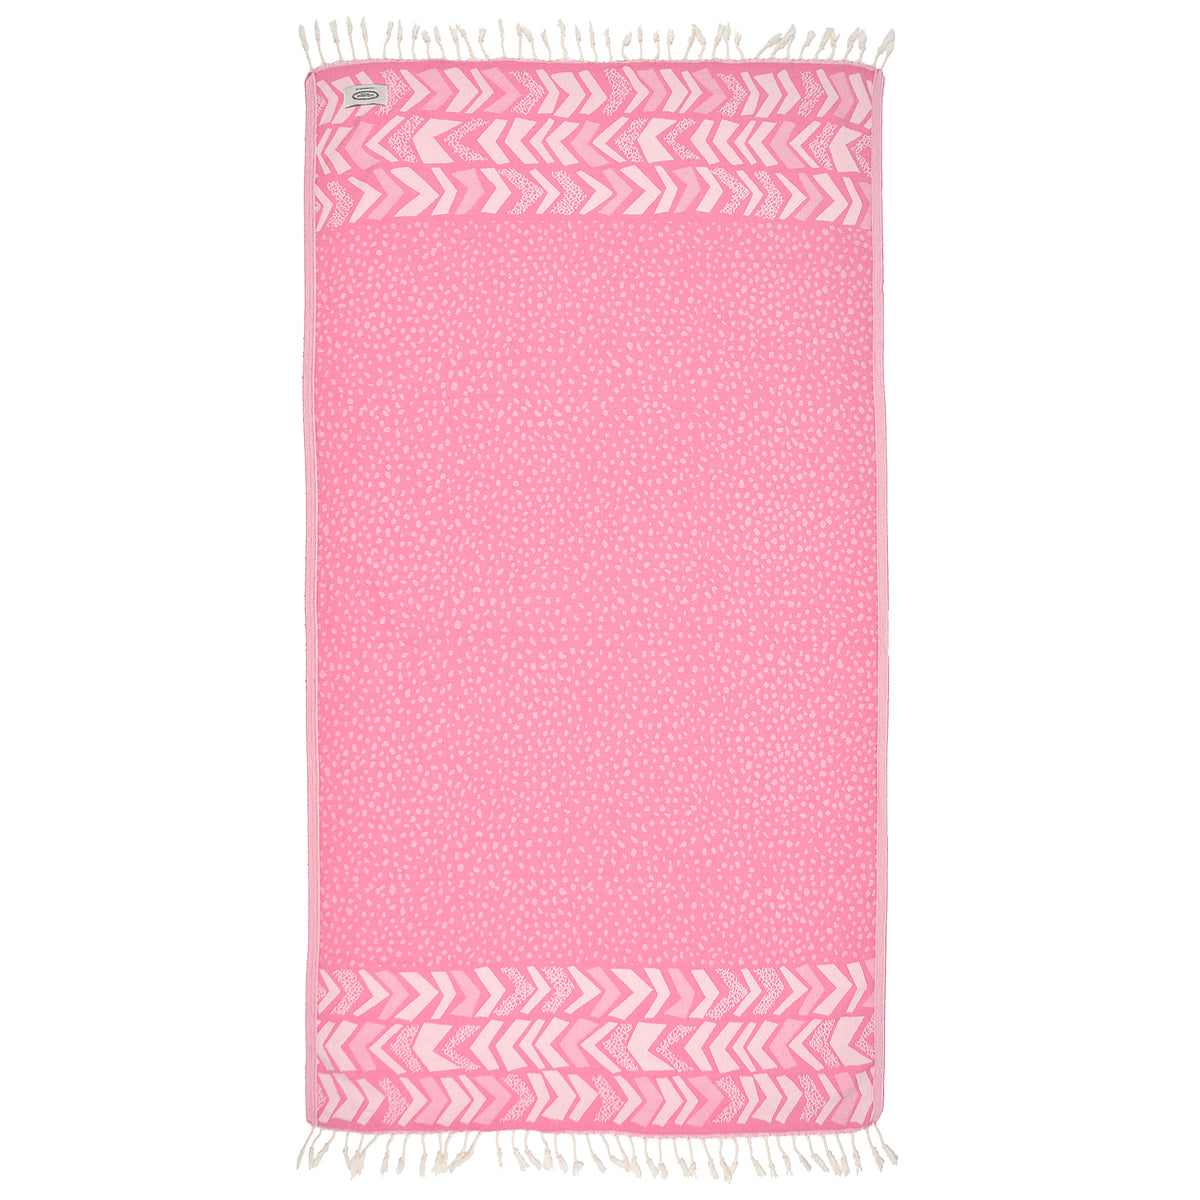 Exclusive Flinstone Peshtemal Pure Cotton Beach Towel